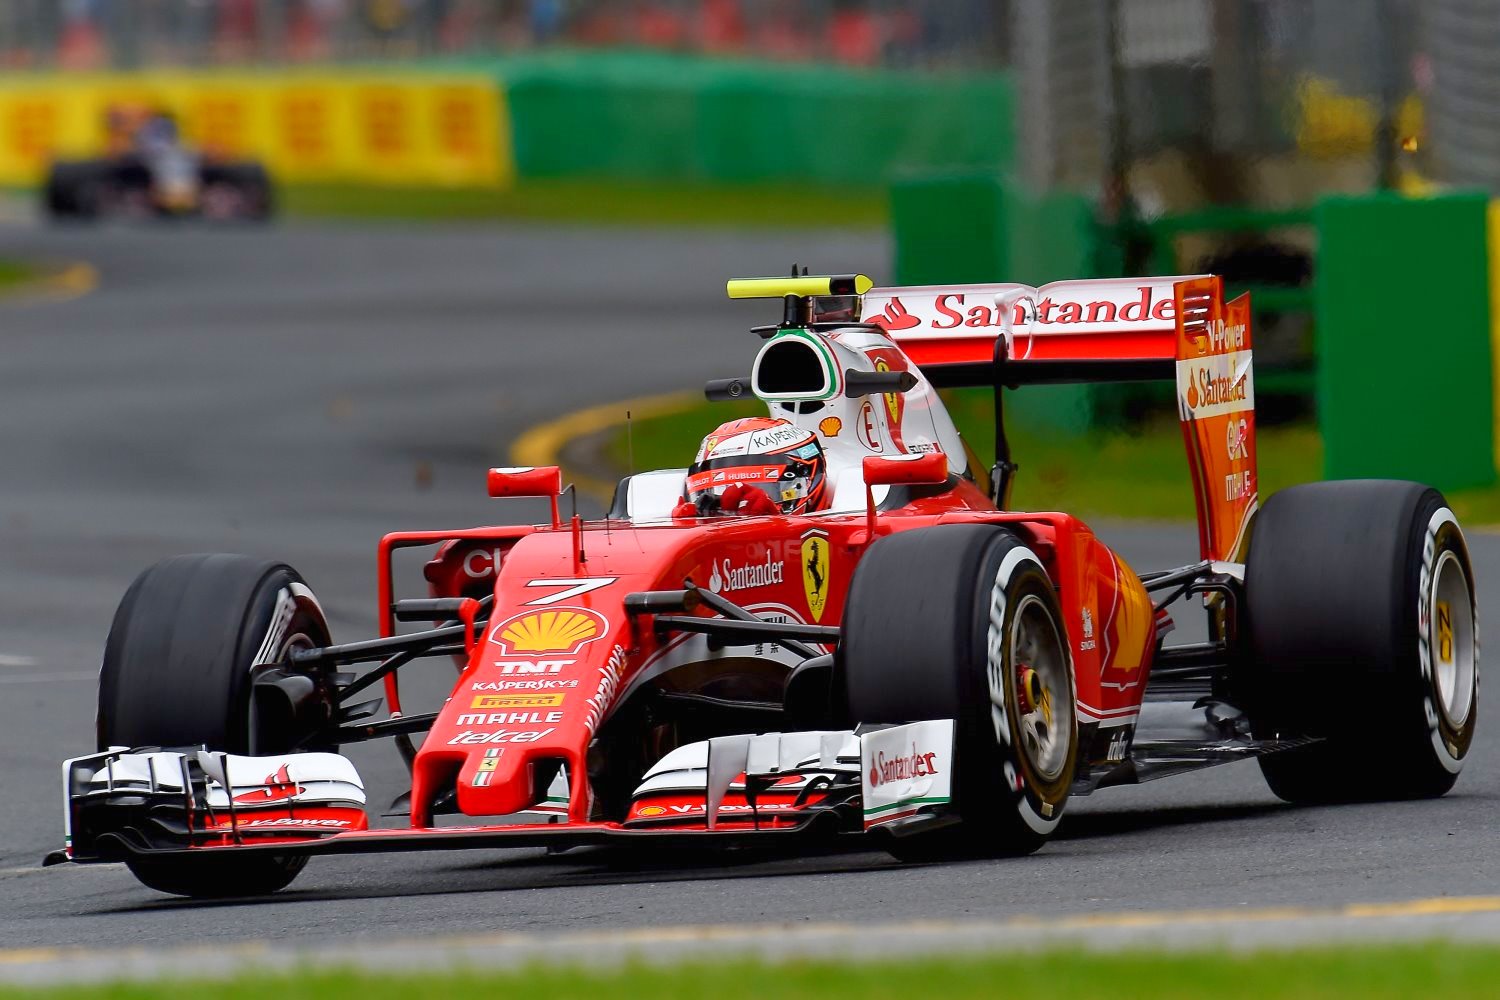 Kimi Raikkonen thinks Ferrari can challenge Mercedes in the race despite being over 1-second per lap slower